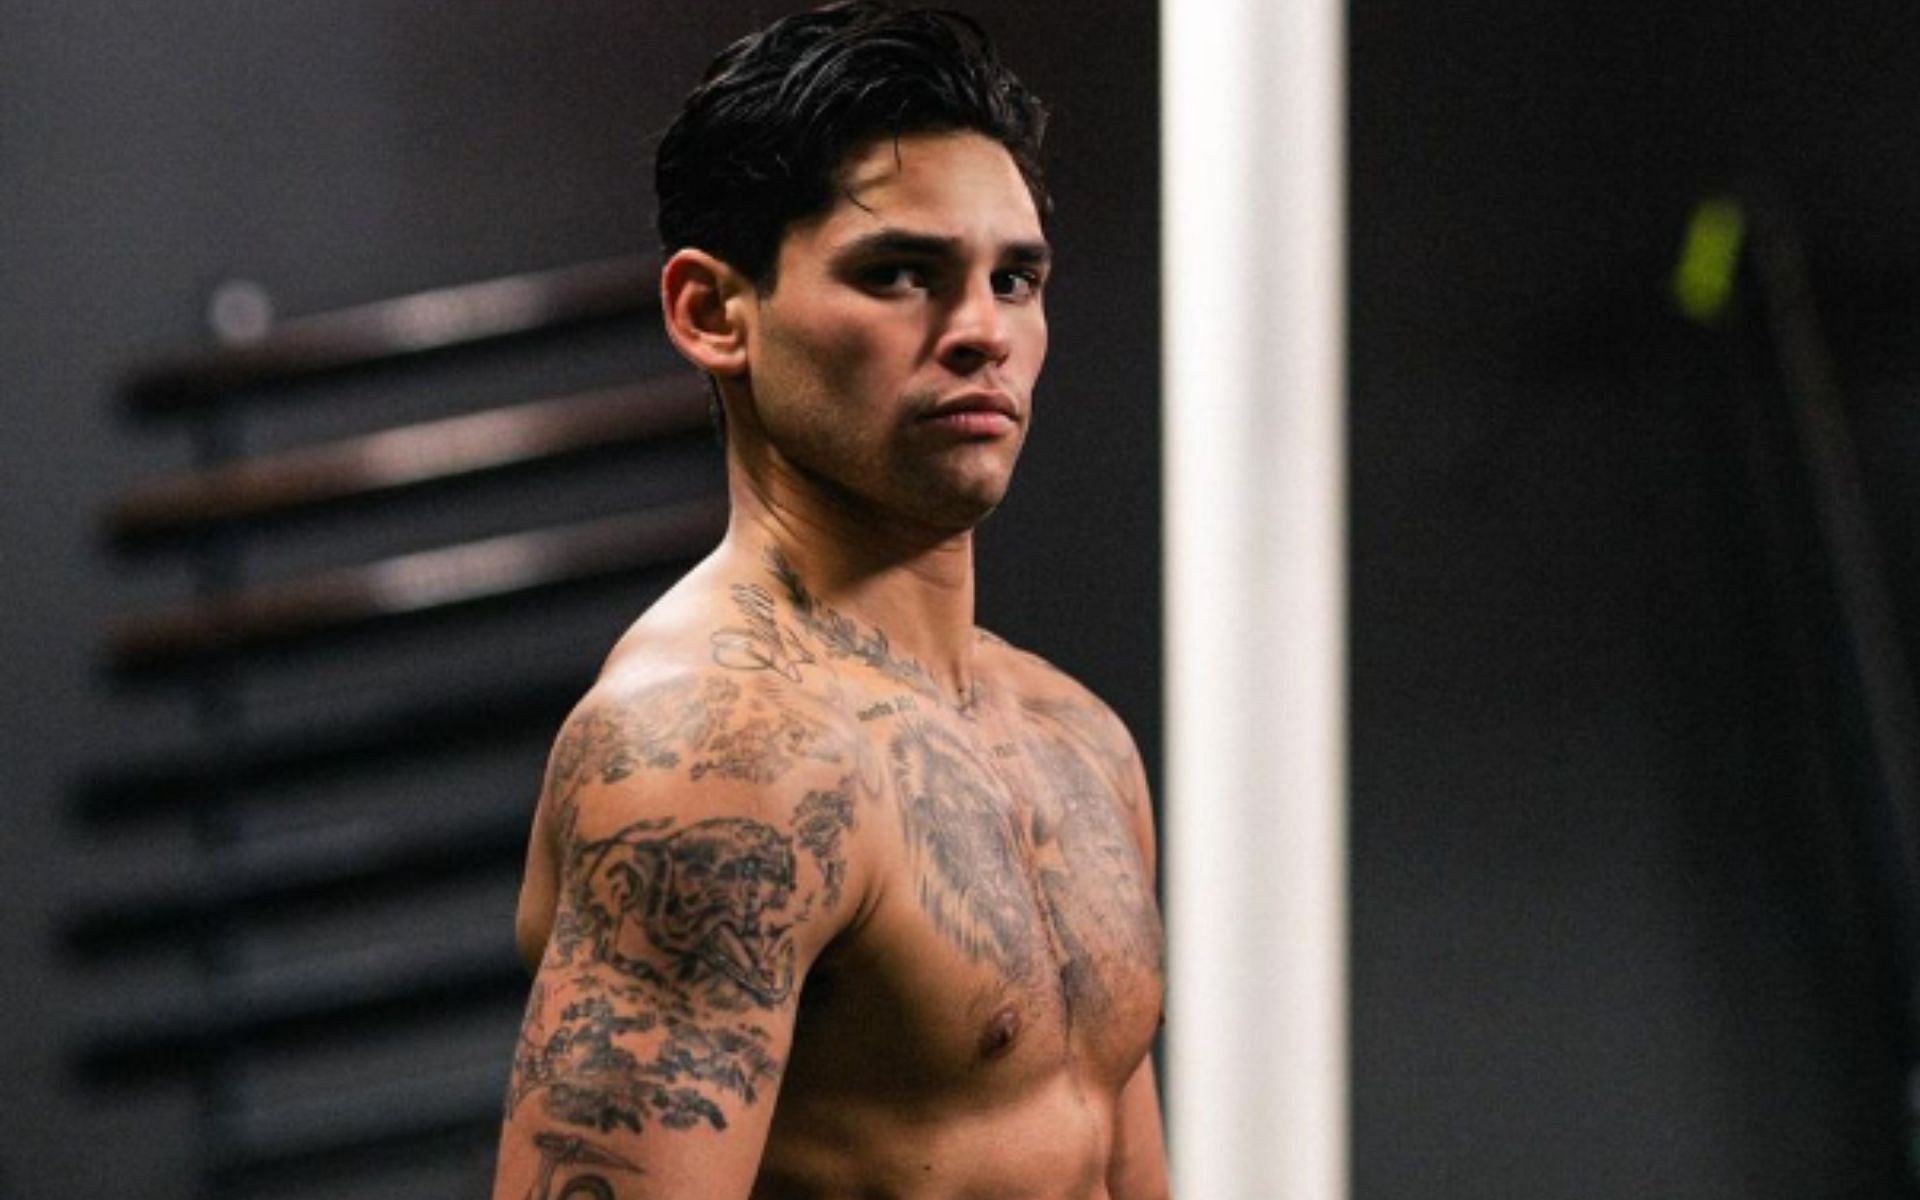 Has Ryan Garcia lost during his boxing career? [Image courtesy of @kingryan on Instagram]